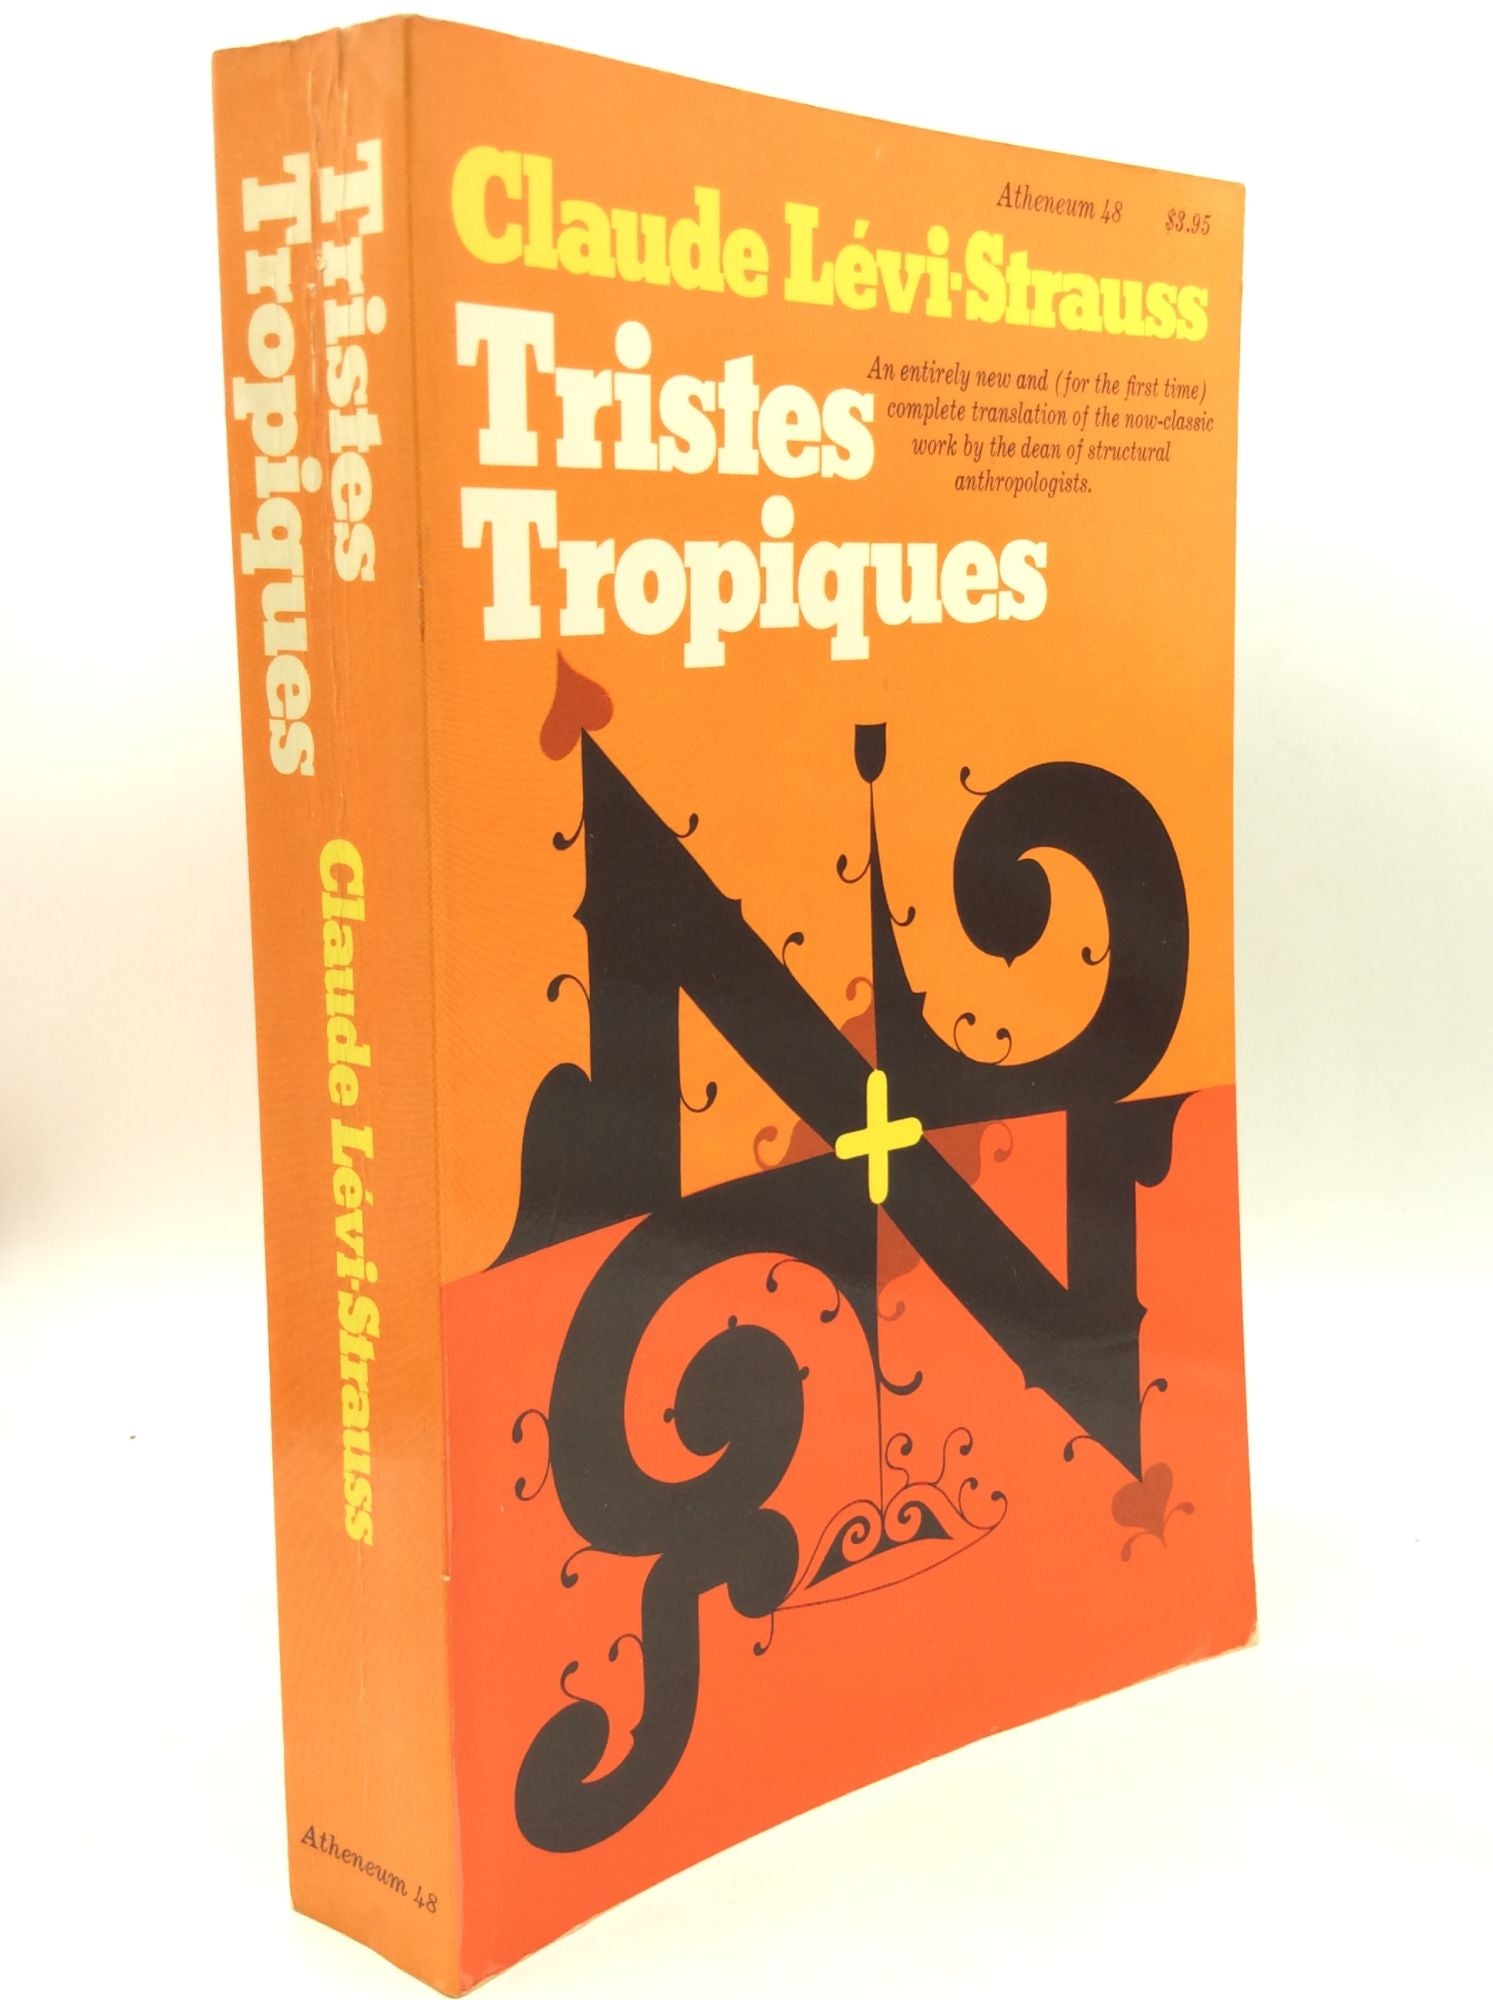 Claude Levi-Strauss - Tristes Topiques